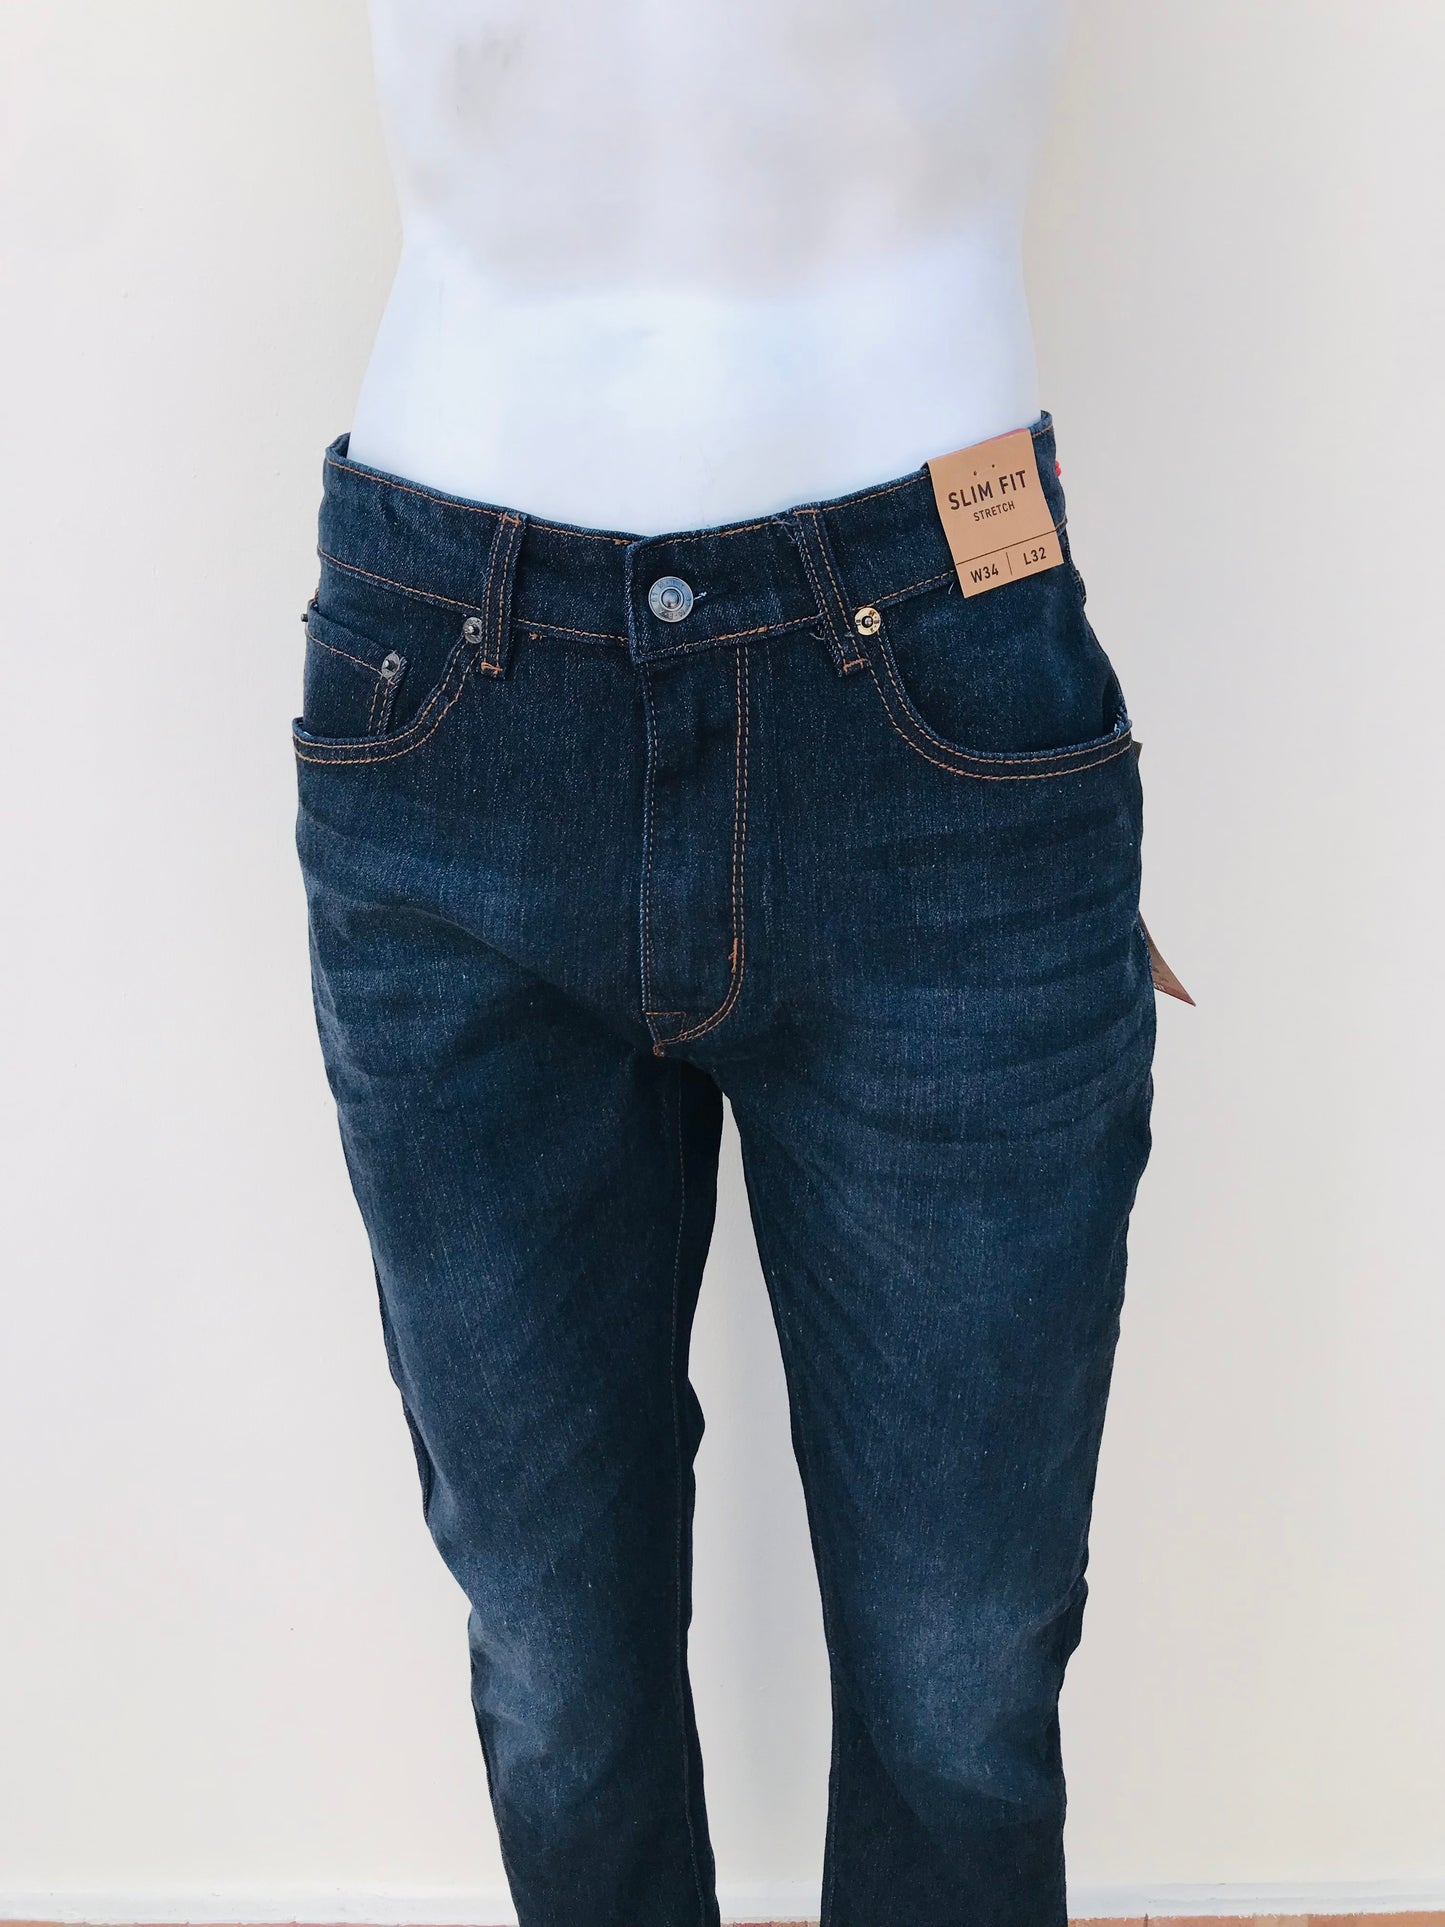 Pantalón jeans M B X original, azul marino oscuro liso.